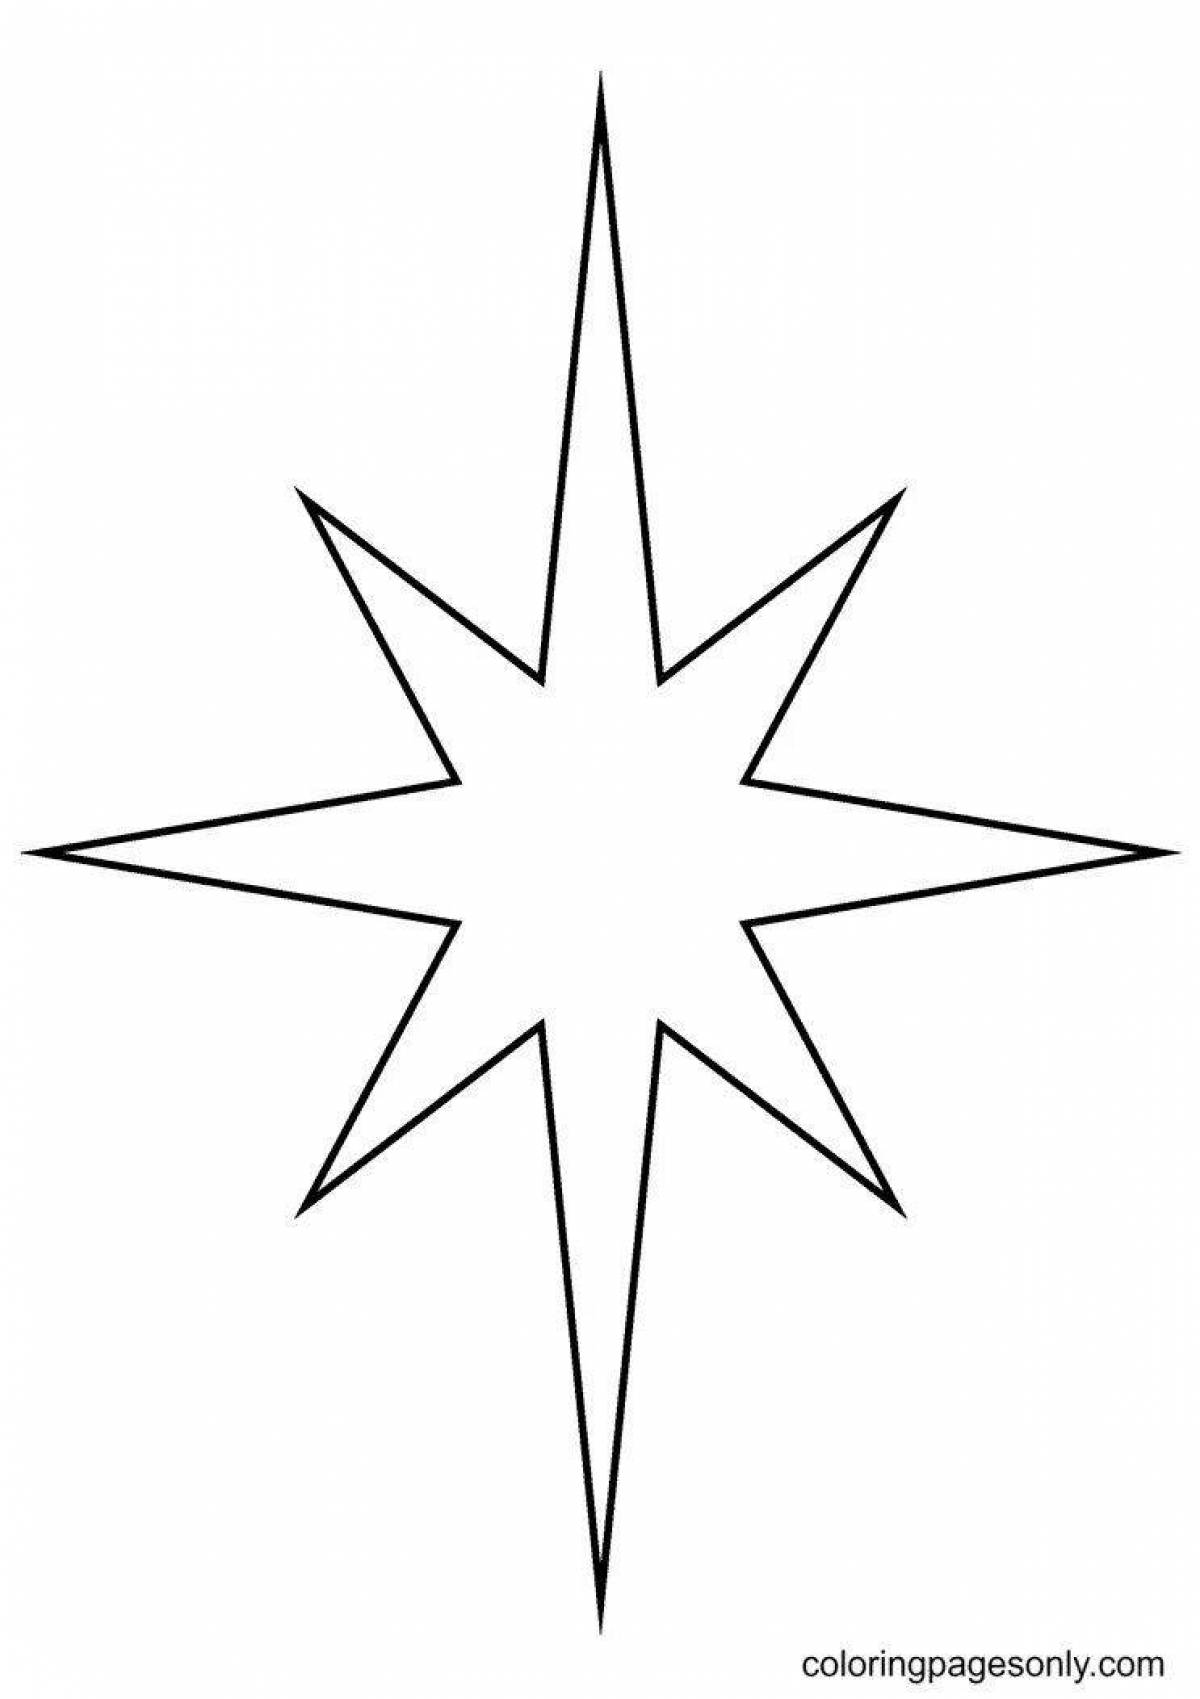 Star of Bethlehem #14